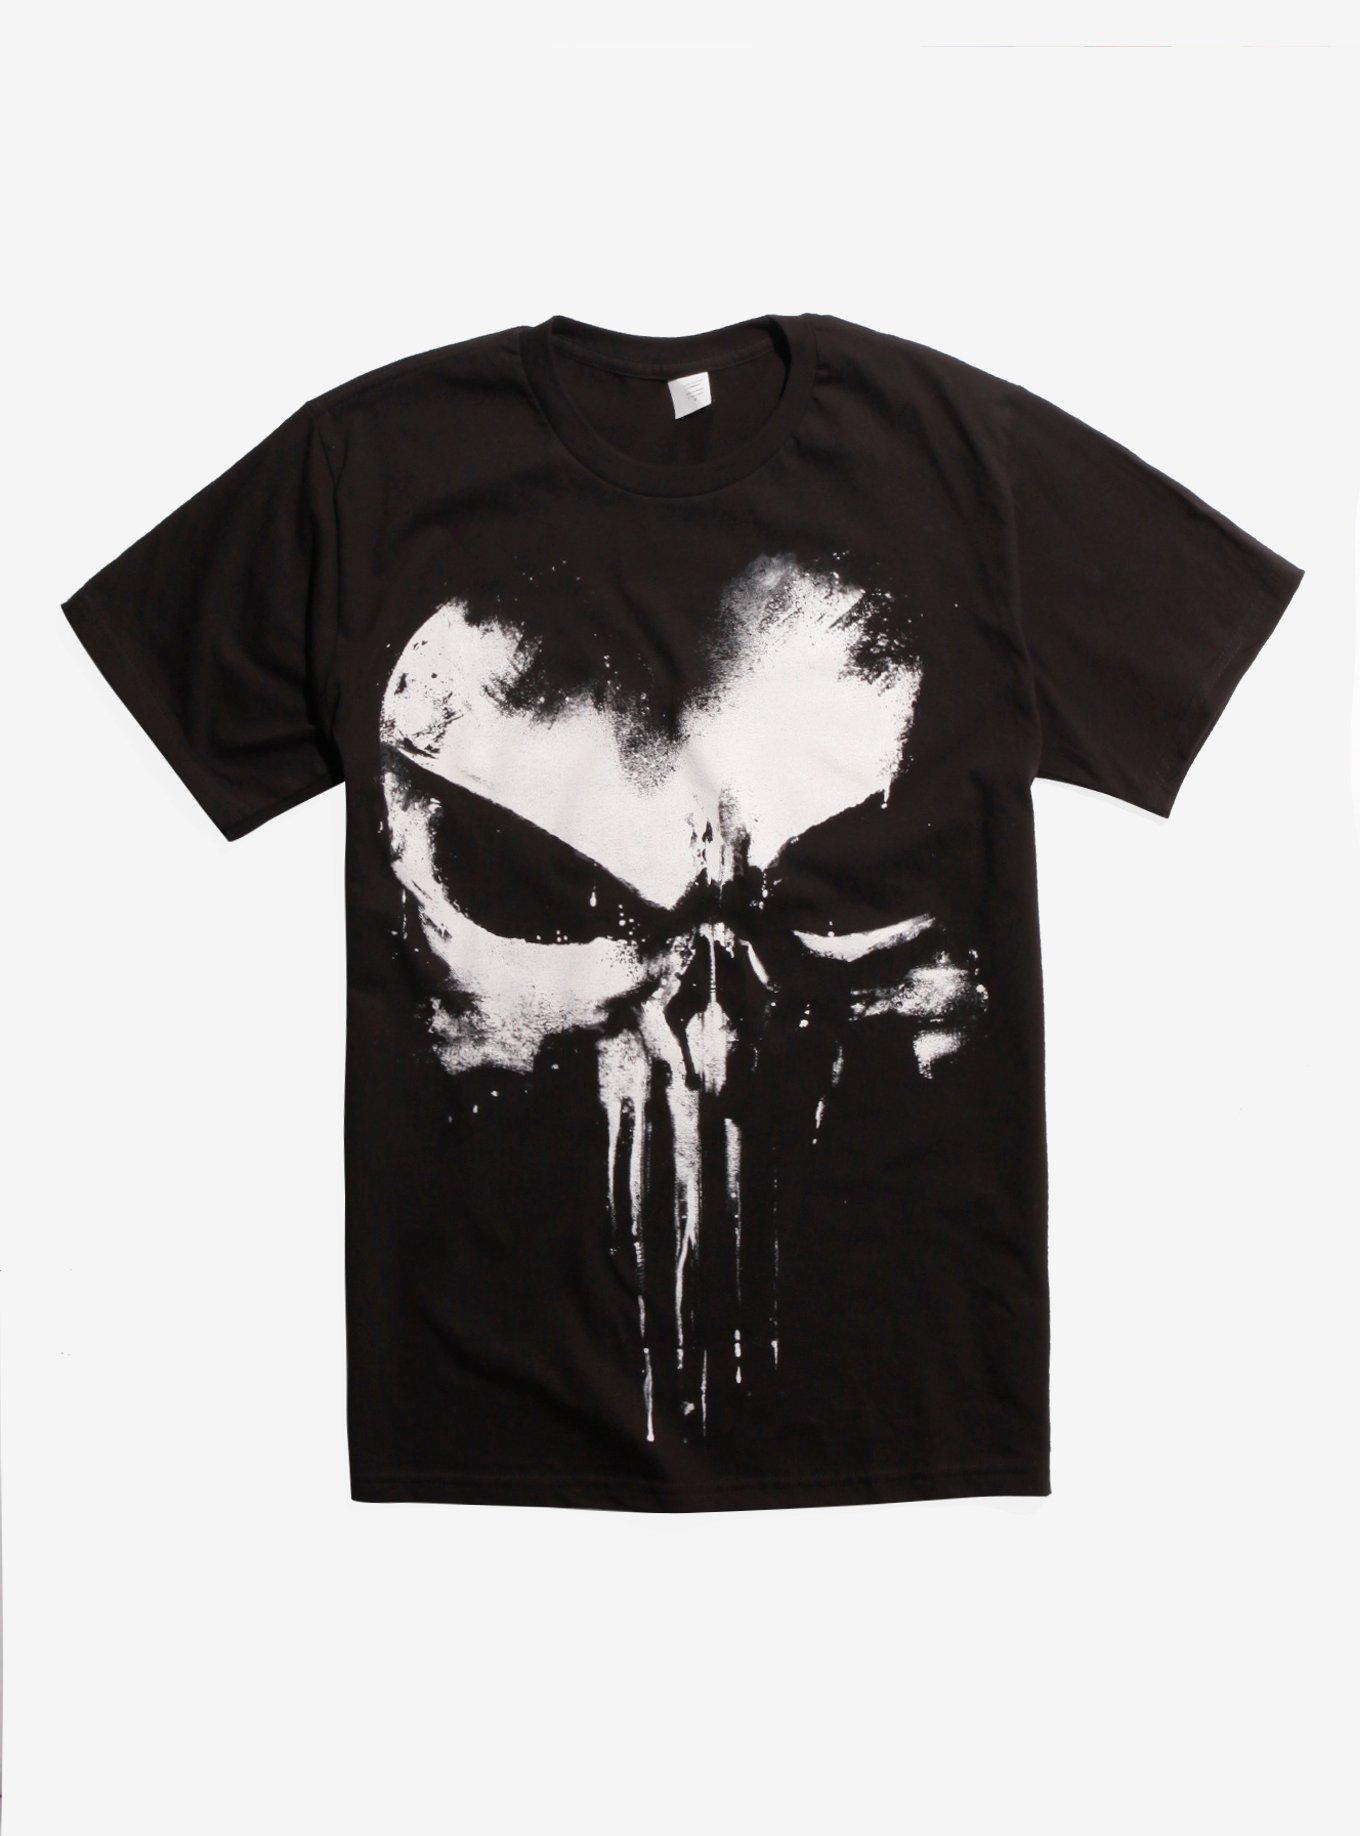 The Punisher Sprayed Skull Logo Tanktop Black XL